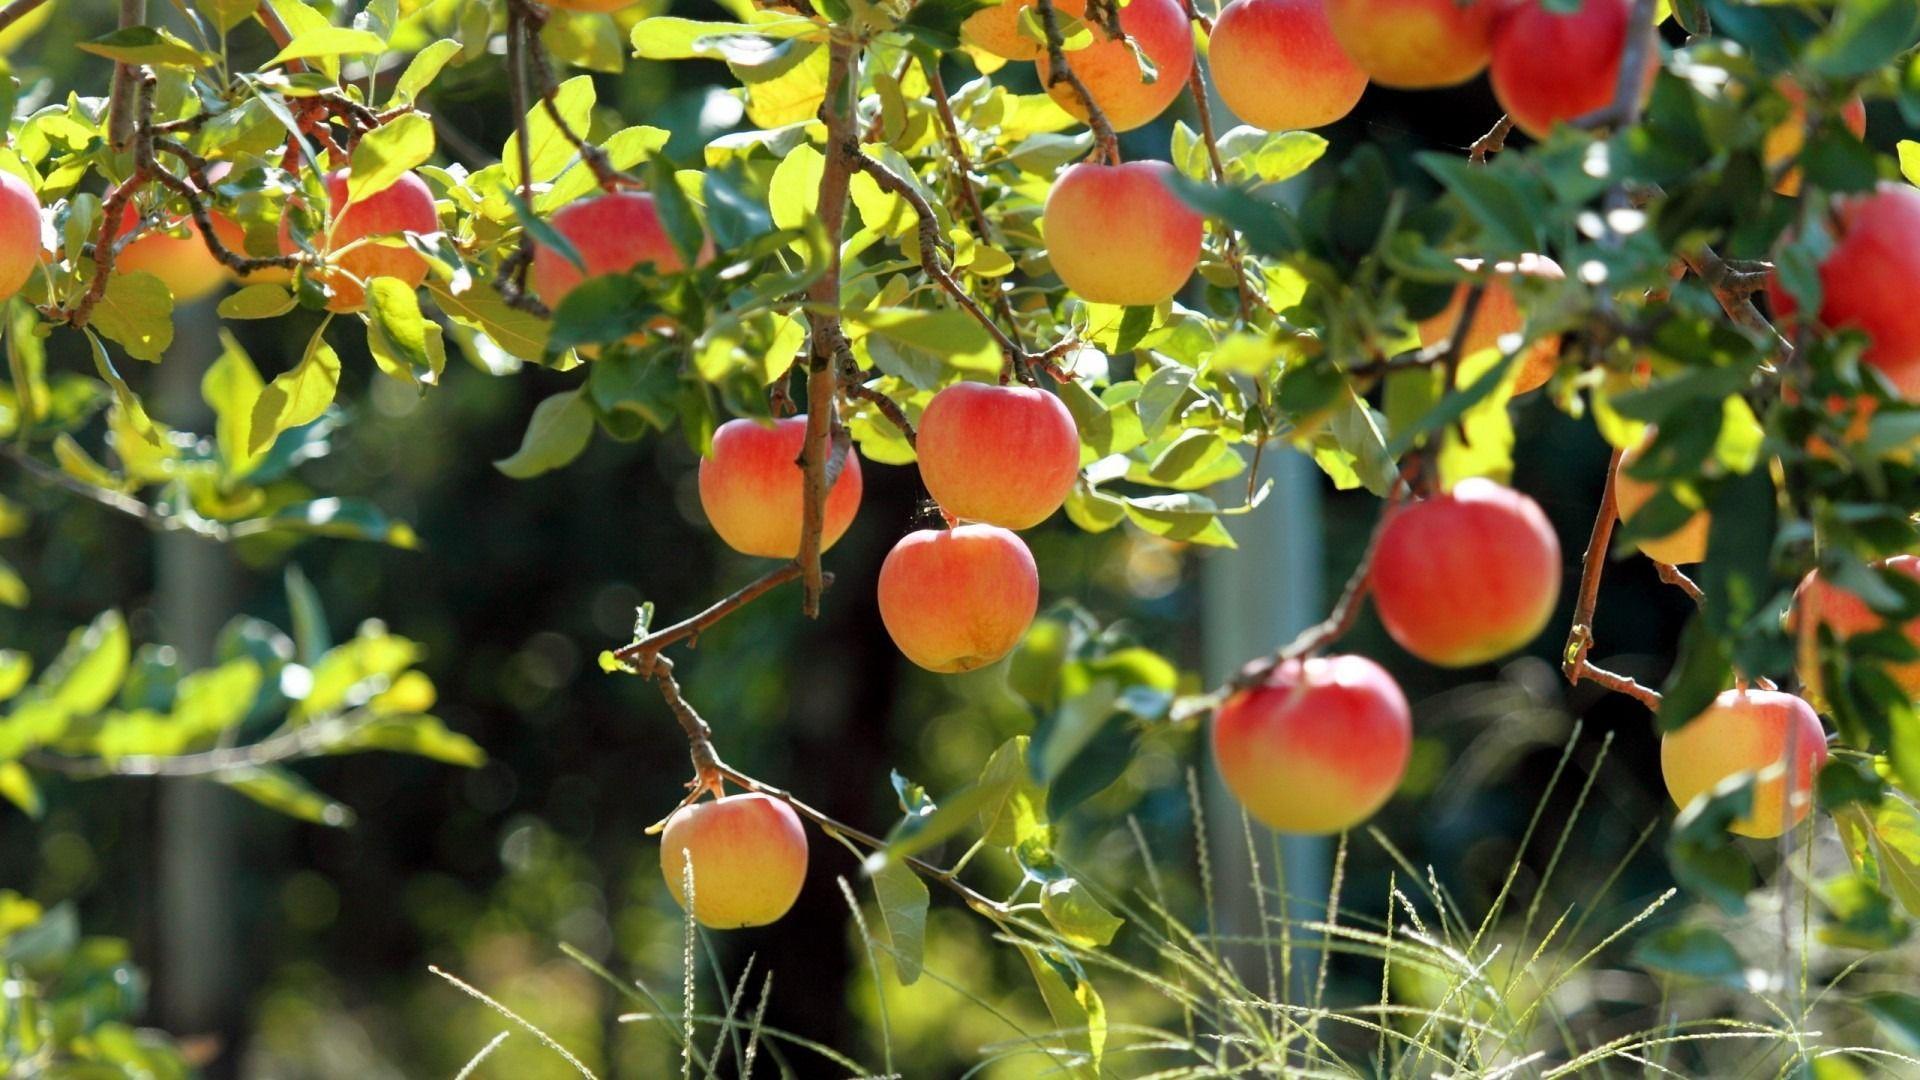 Apple Tree HD Wallpaper 1080p Imageize:1920×1080. Fruit garden, Fruit trees, Fruit wallpaper